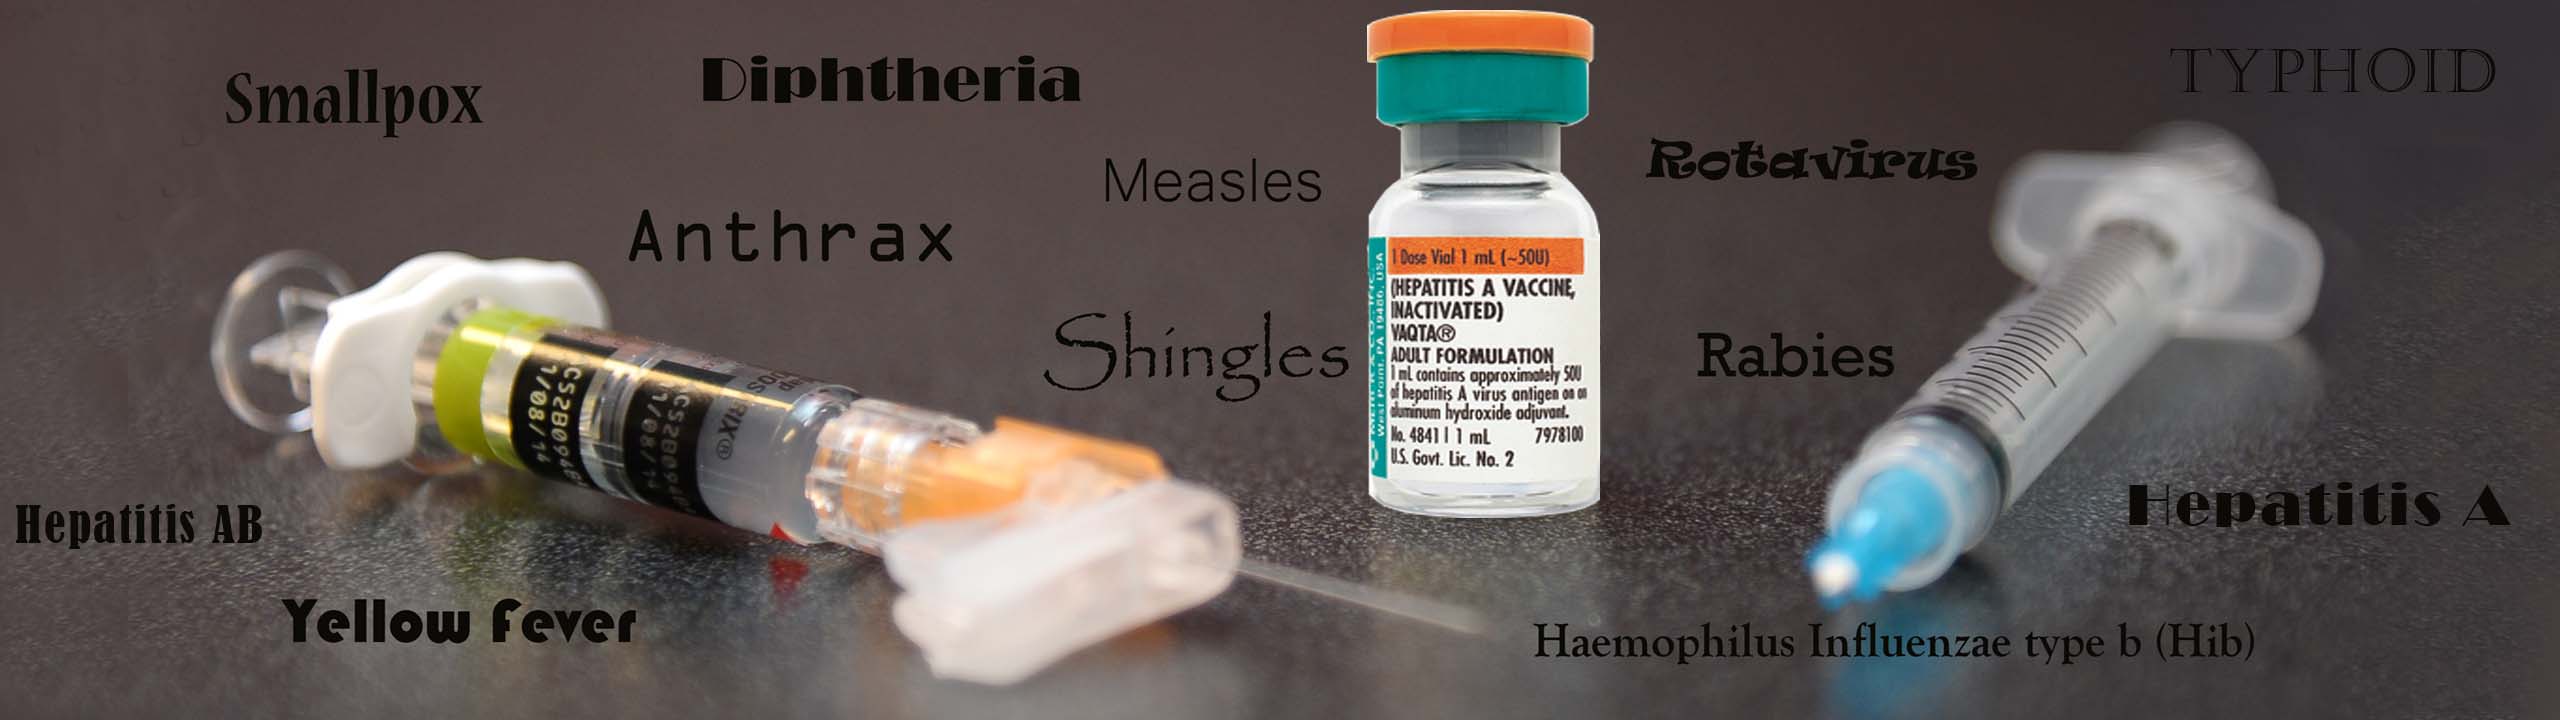 Hepatitis A And Typhoid Vaccine